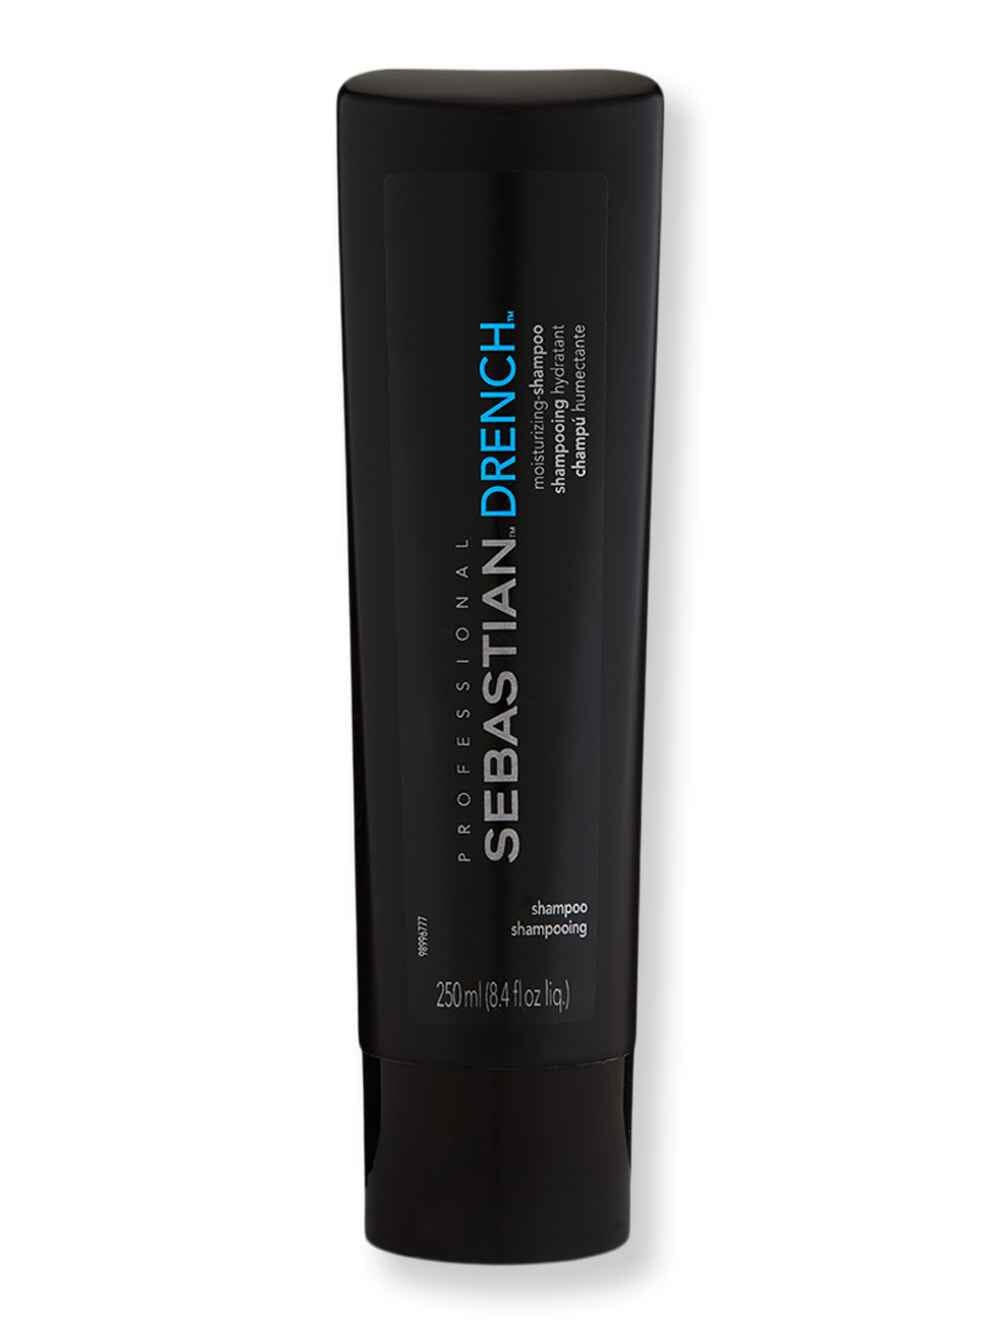 Sebastian Sebastian Drench Shampoo 8.4 oz250 ml Shampoos 